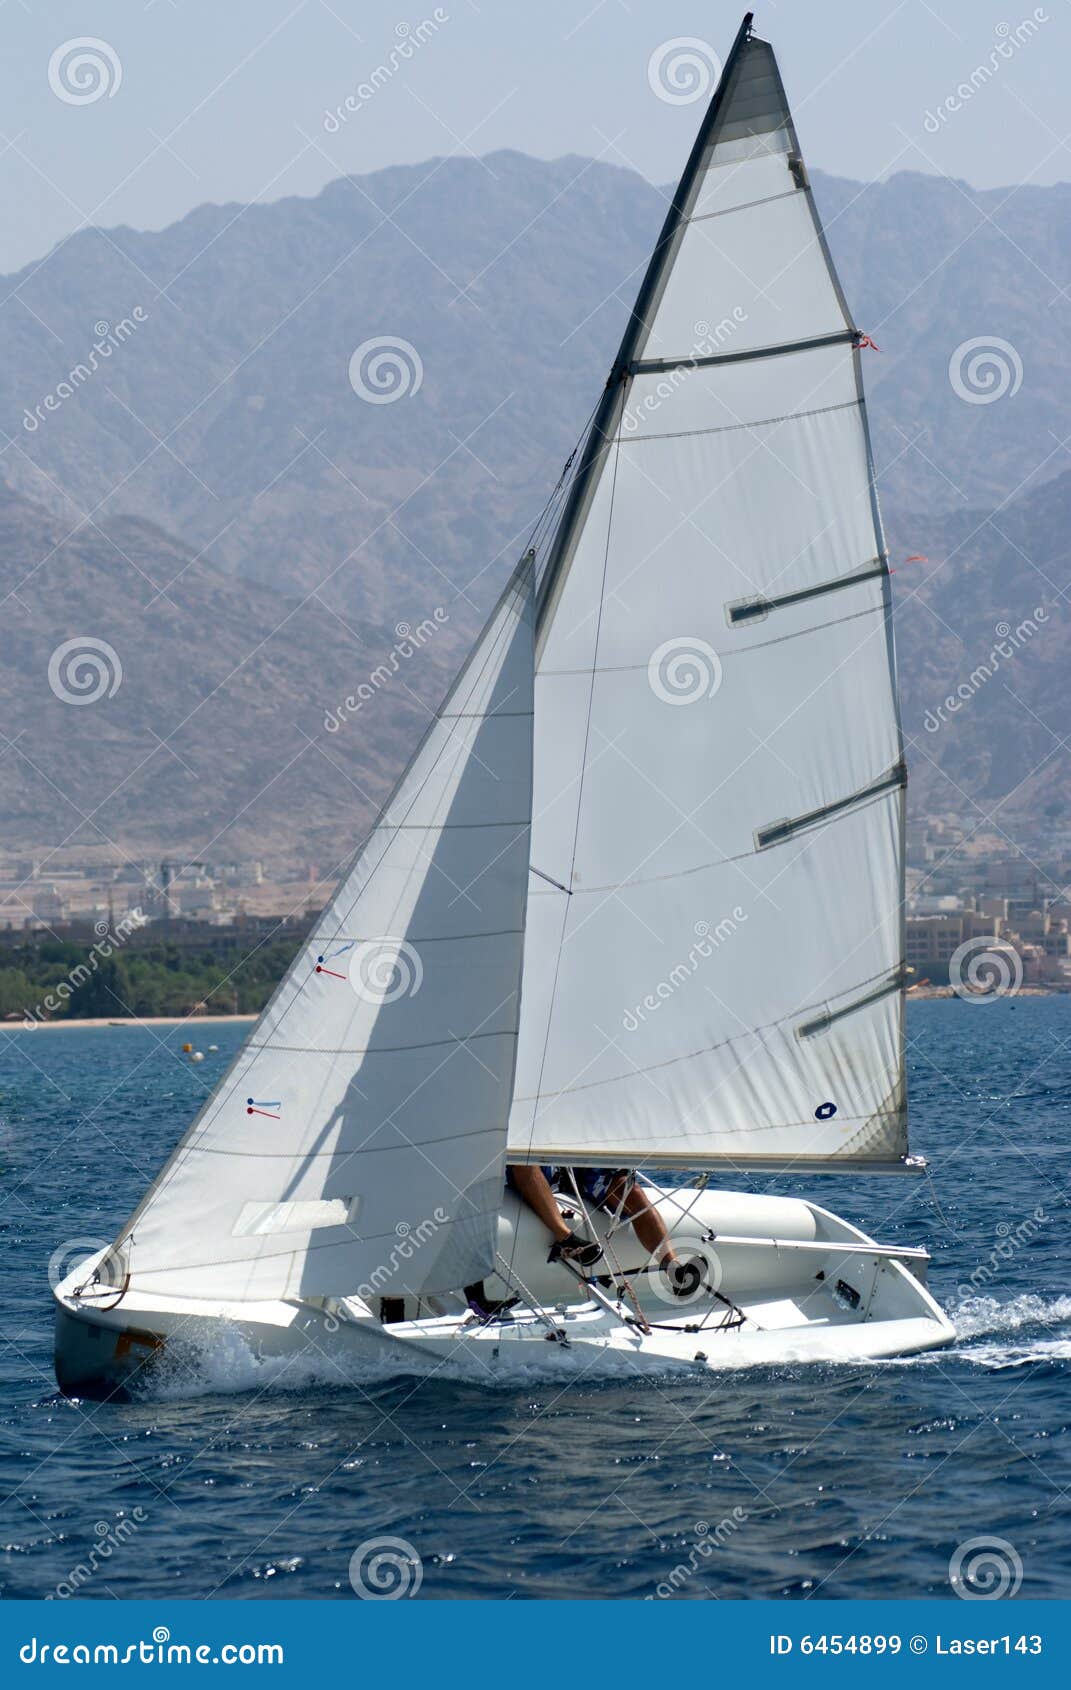 Team sailing on a small sail boat.